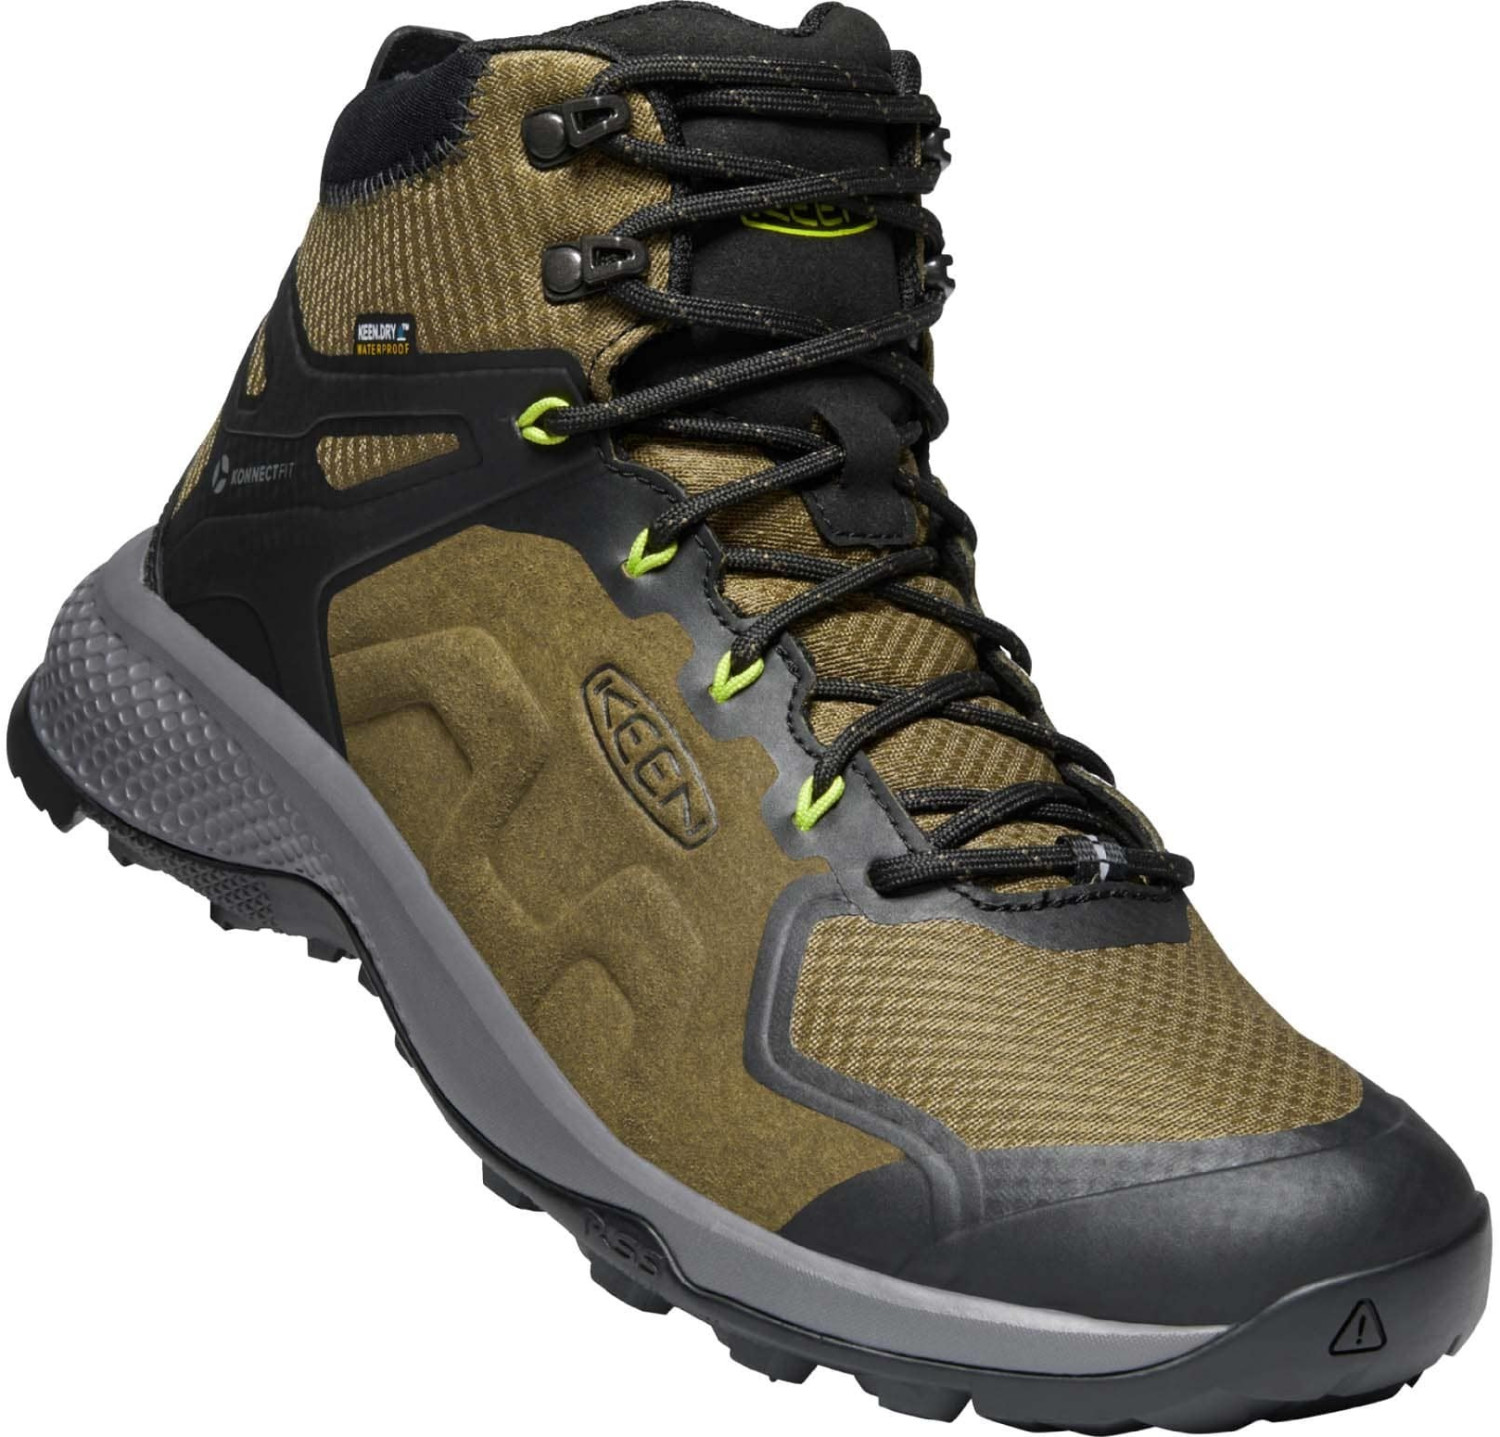 Keen Explore Waterproof Hiking Boots dark olive/army au meilleur prix